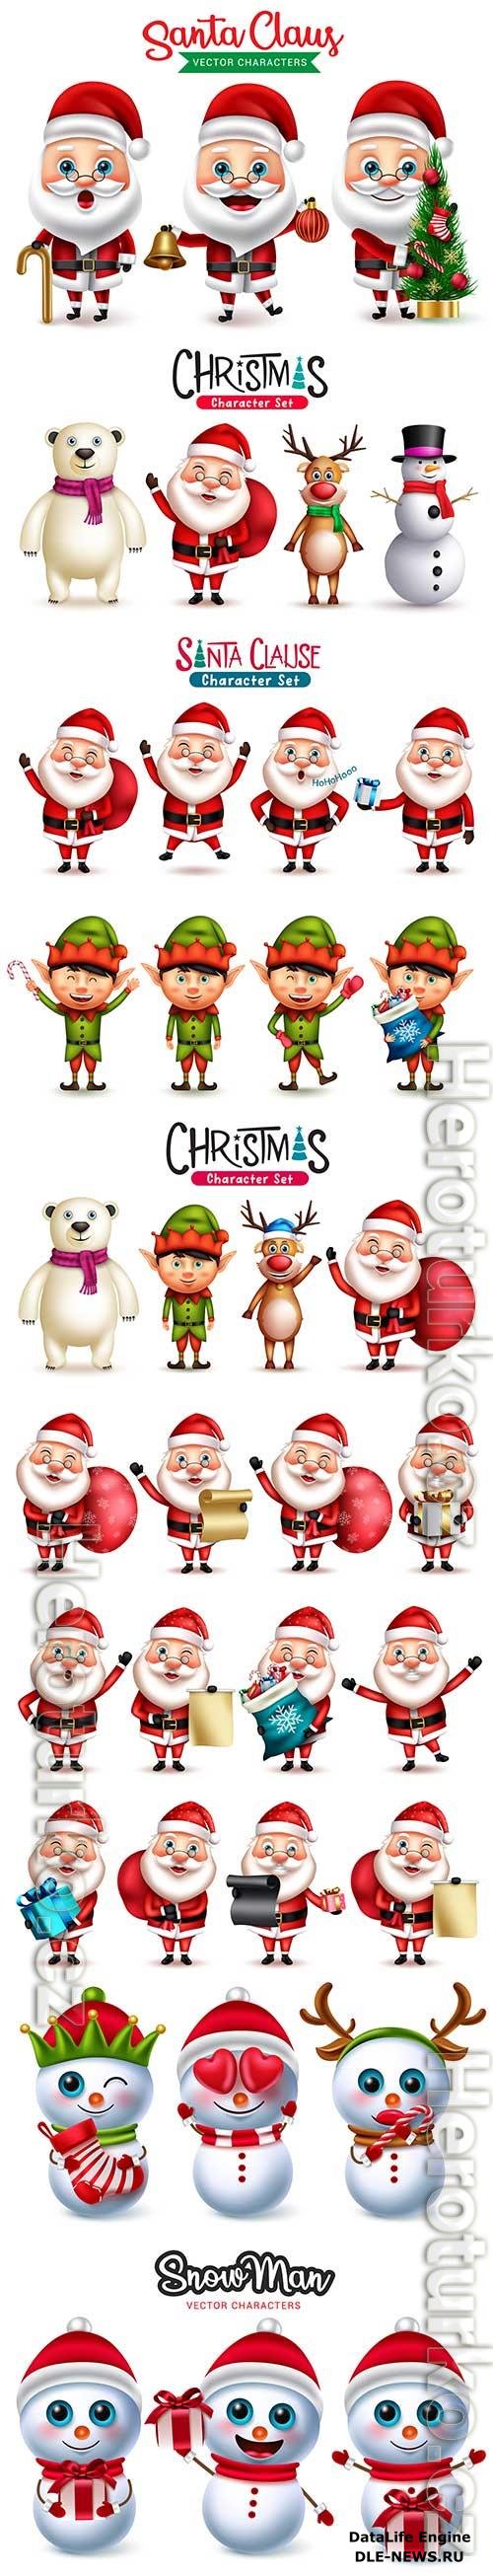 Christmas characters vector set, santa claus, elf, reindeer and polar bear